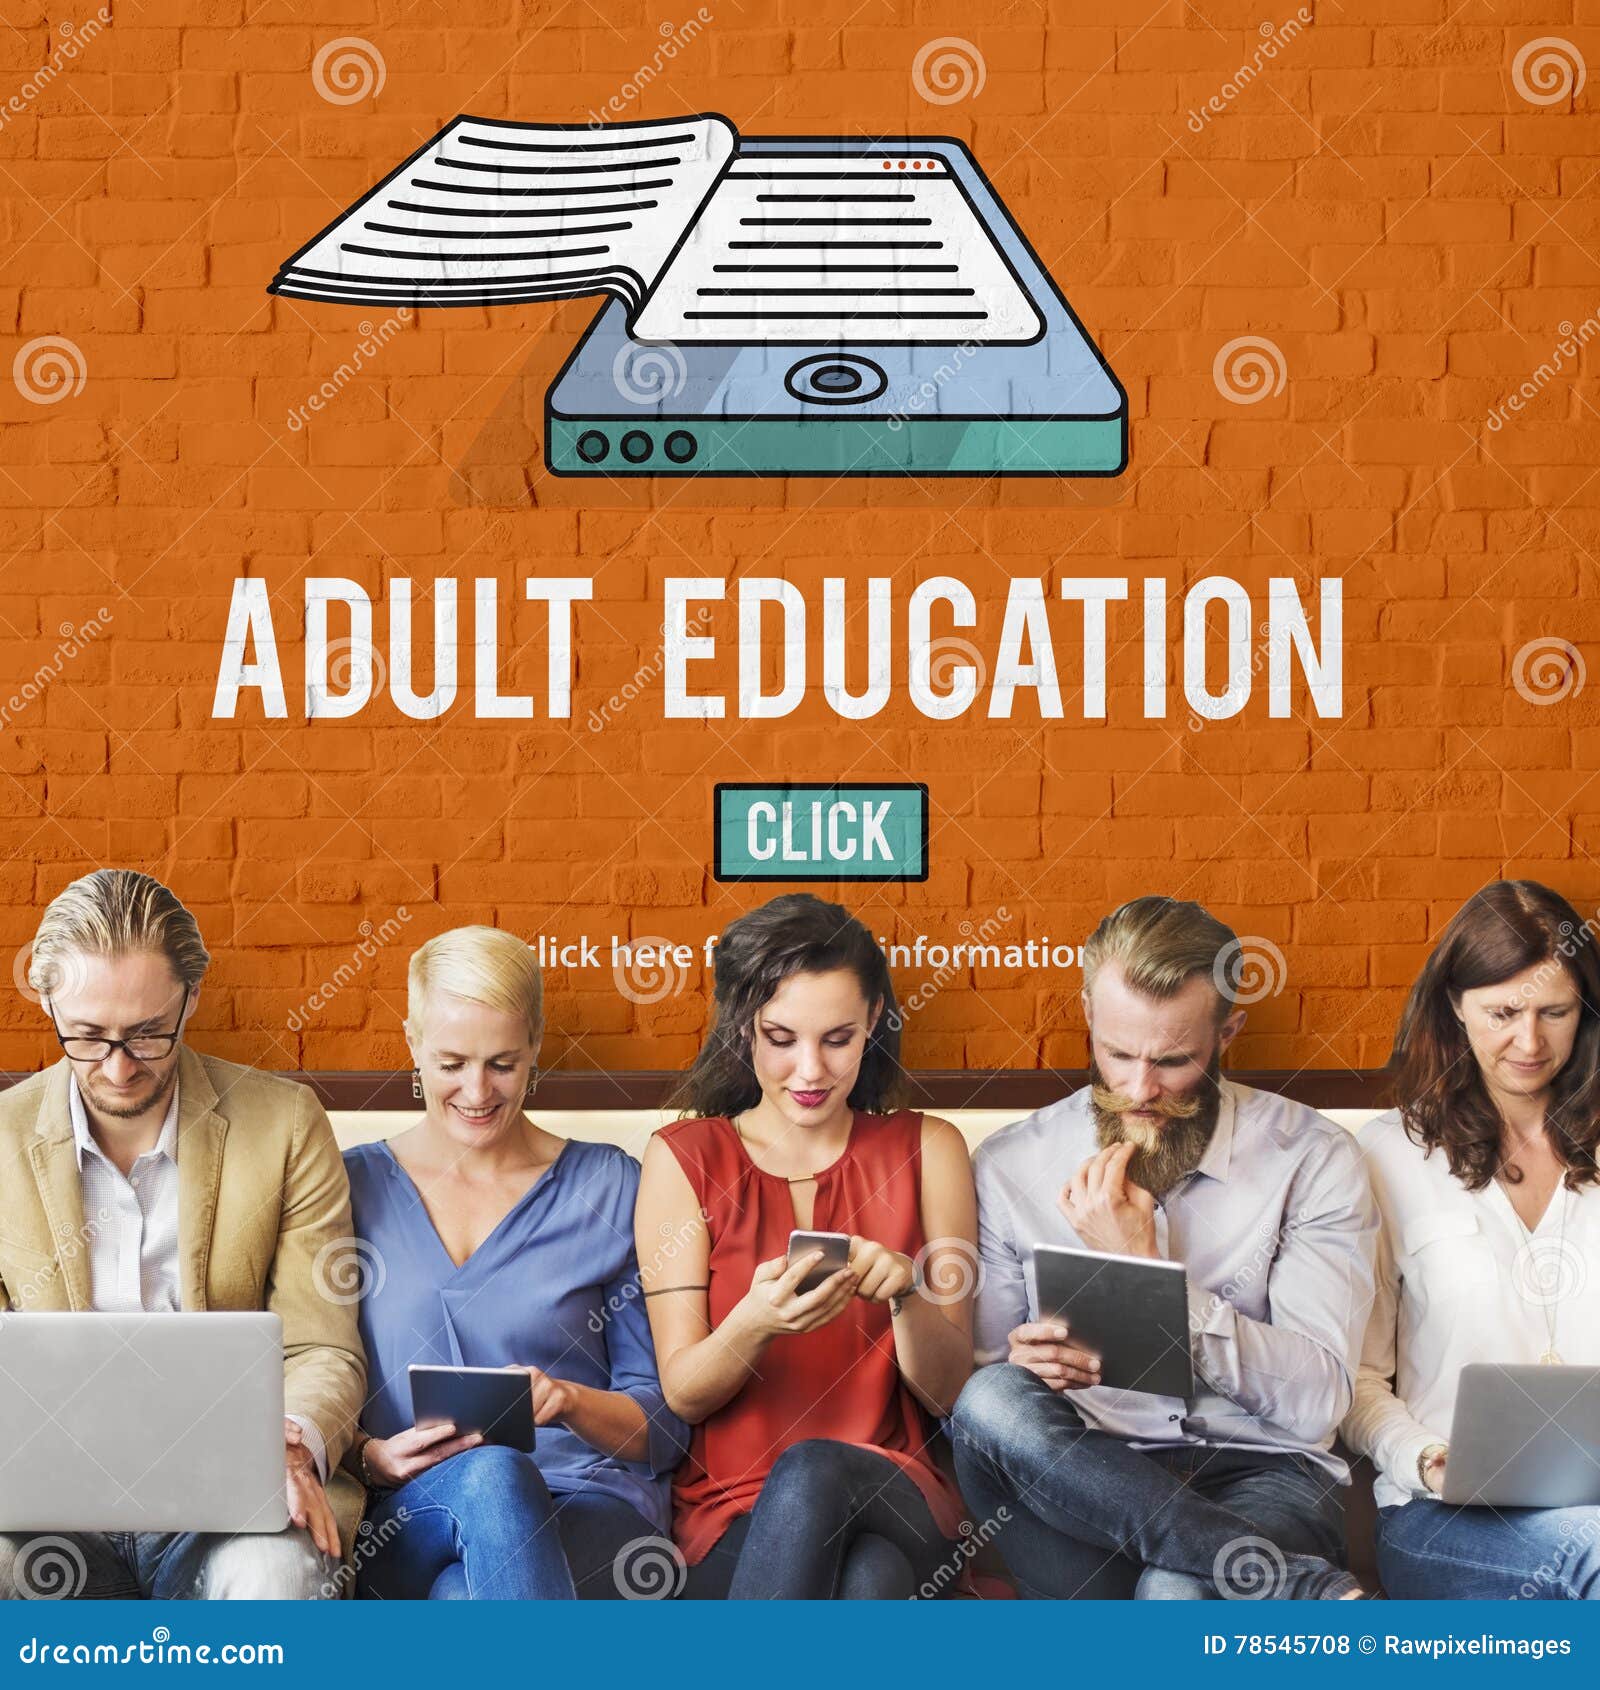 adult education advisory age limit blocked concept